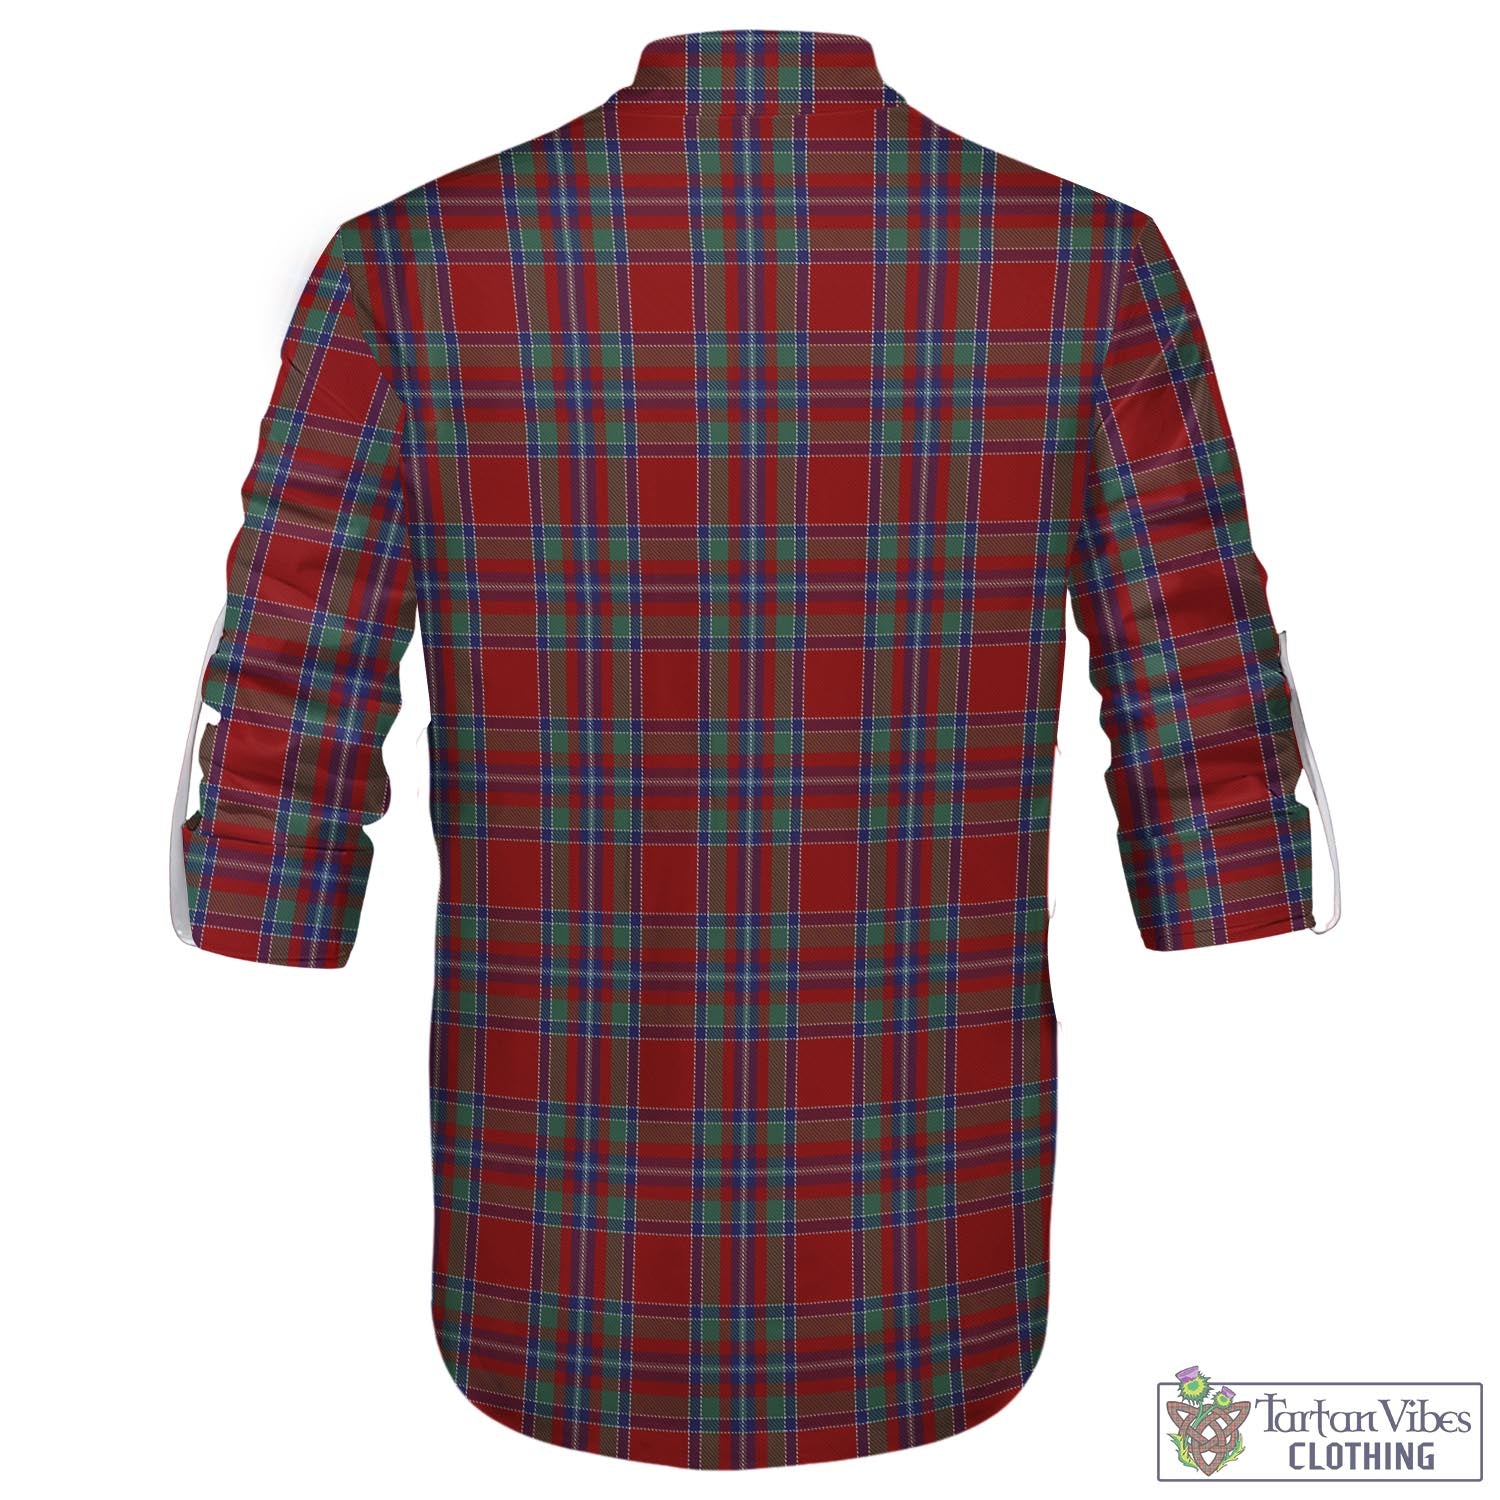 Tartan Vibes Clothing Spens Tartan Men's Scottish Traditional Jacobite Ghillie Kilt Shirt